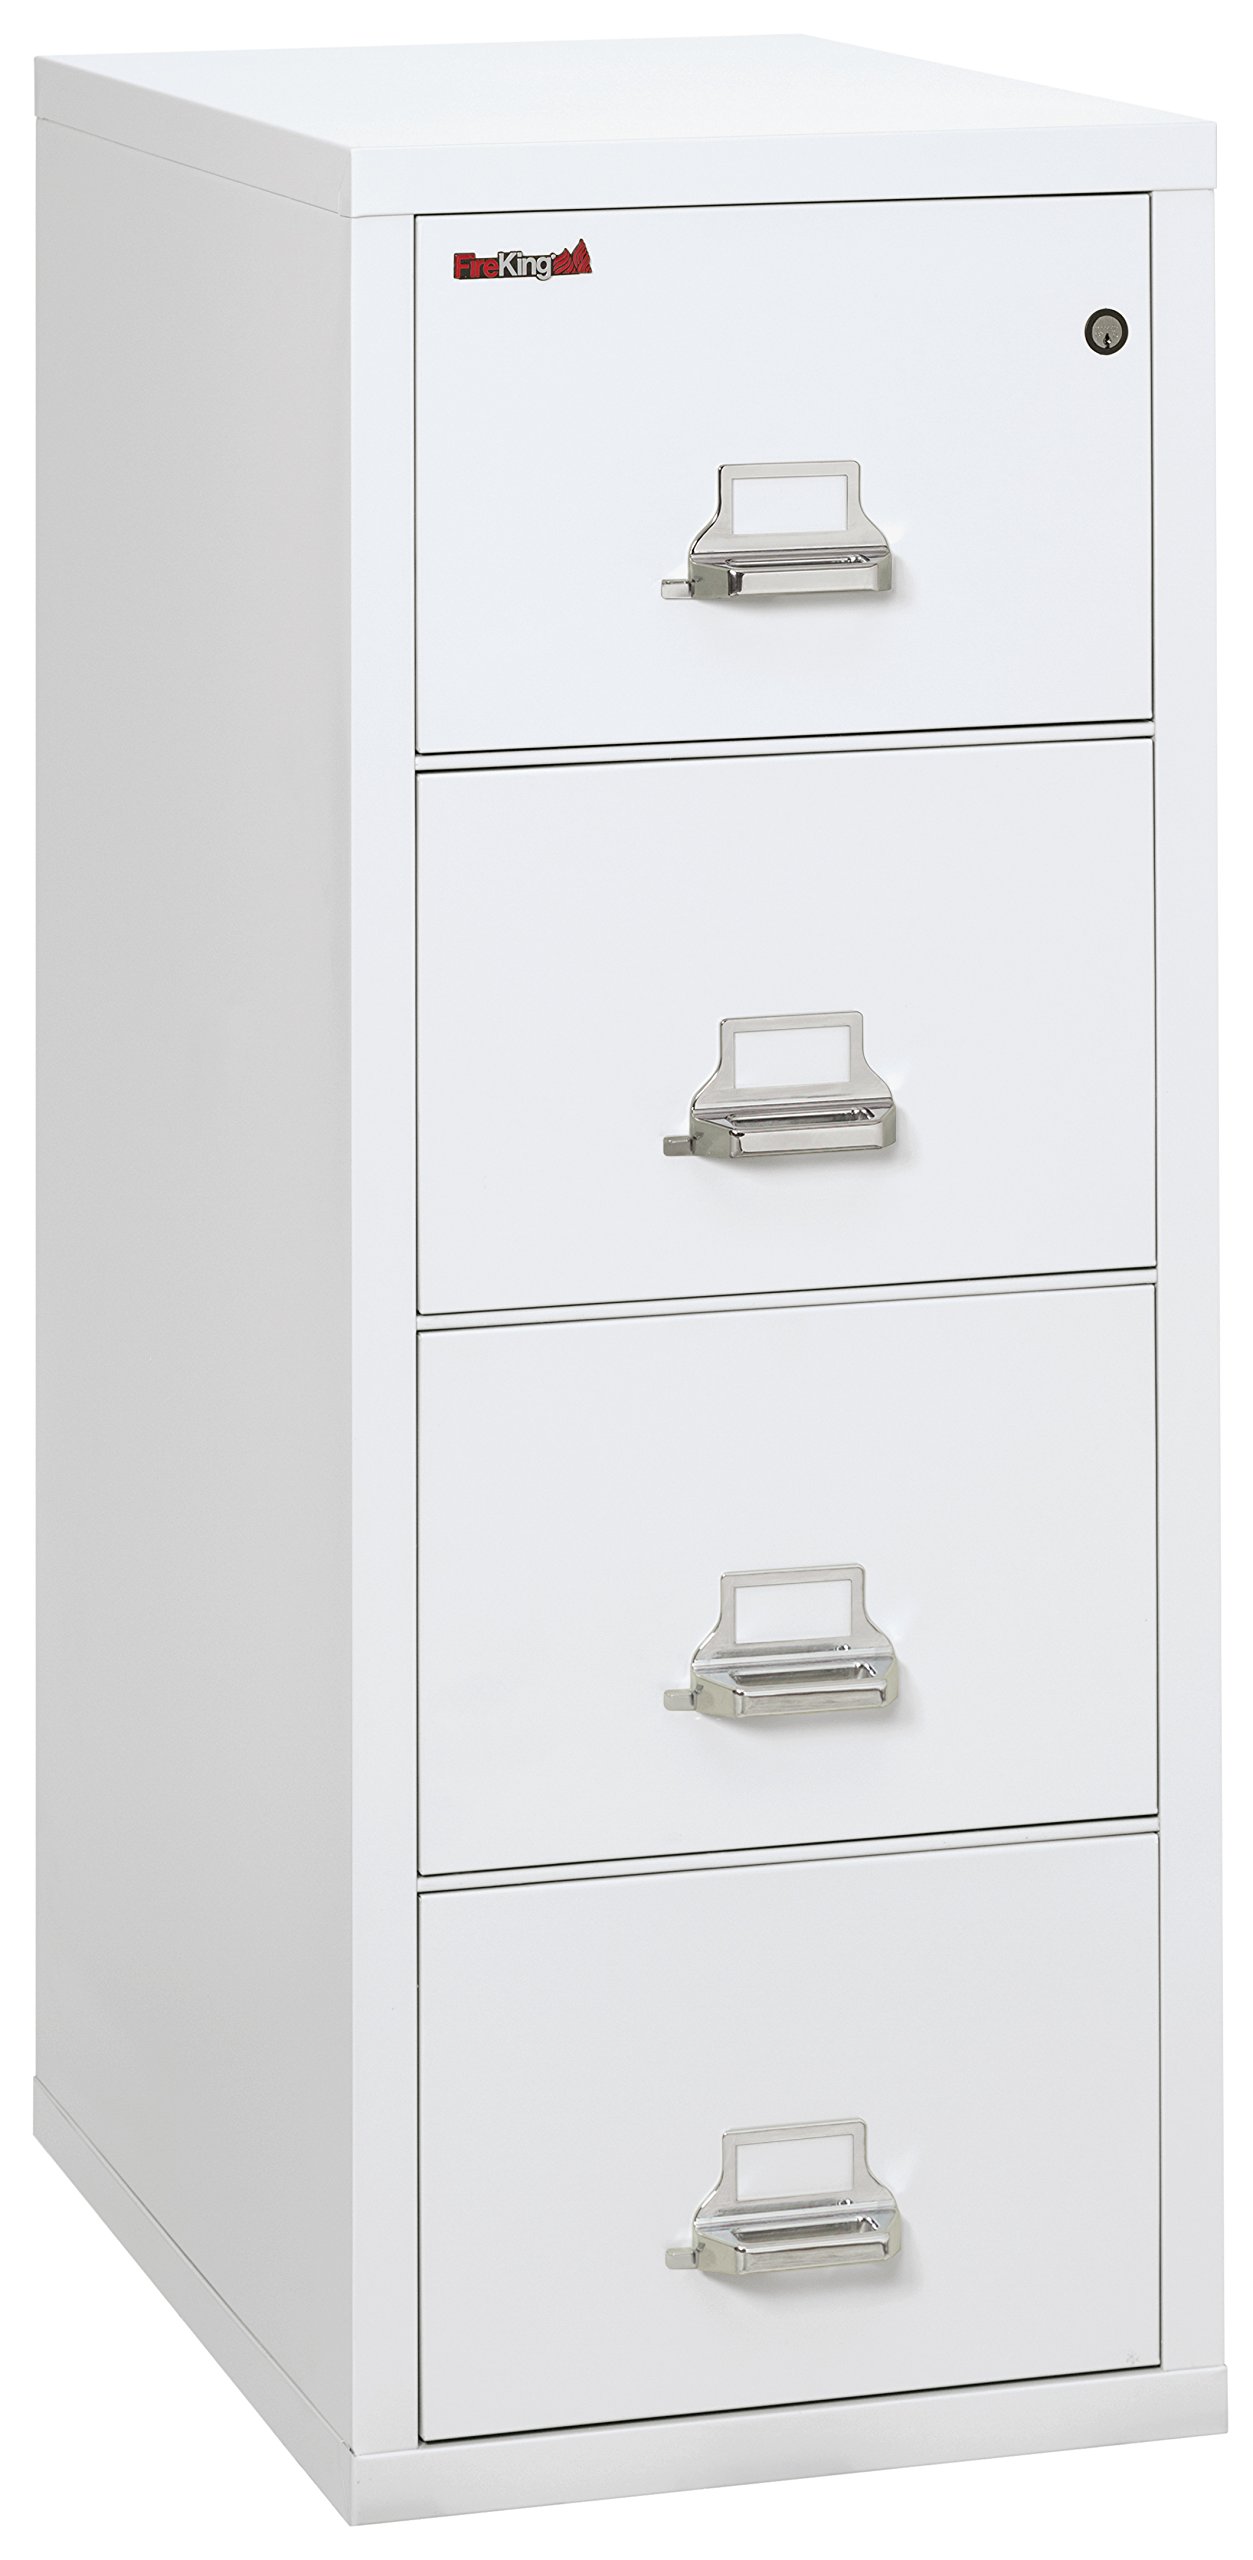 Fireking Fireproof Vertical File Cabinet (2 Letter Sized Drawers, Impact Resistant, Waterproof), 27.75